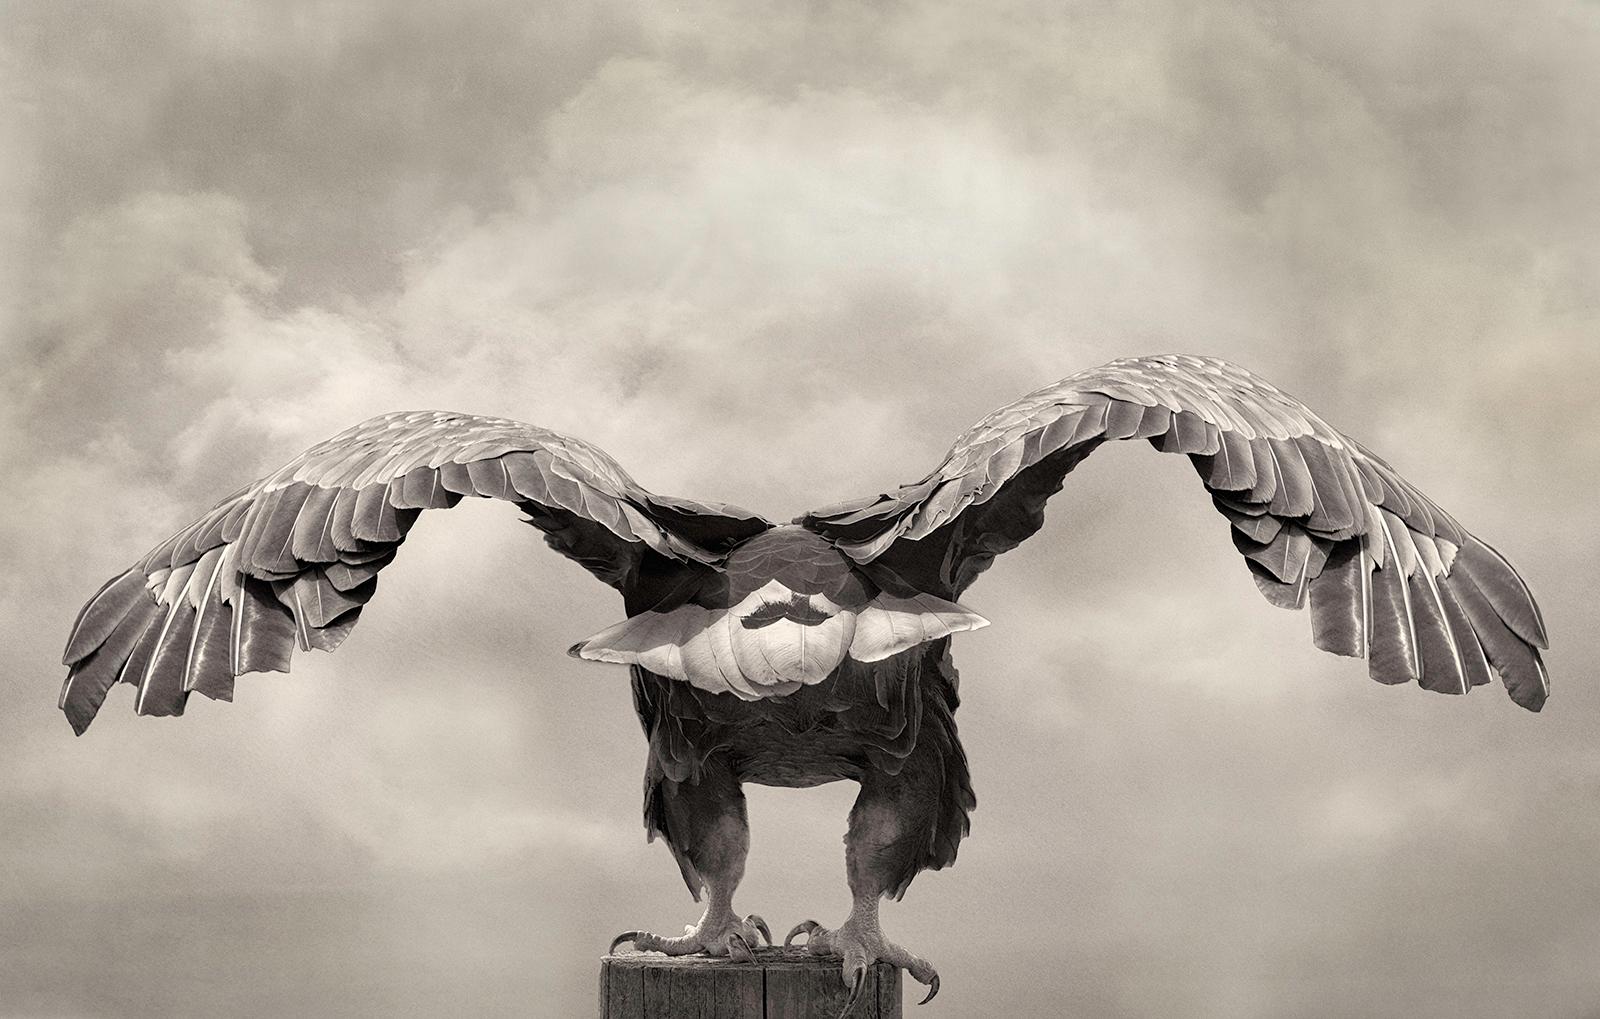 Sea Eagle, limited edition photograph, signed, Platinum/Palladium Print